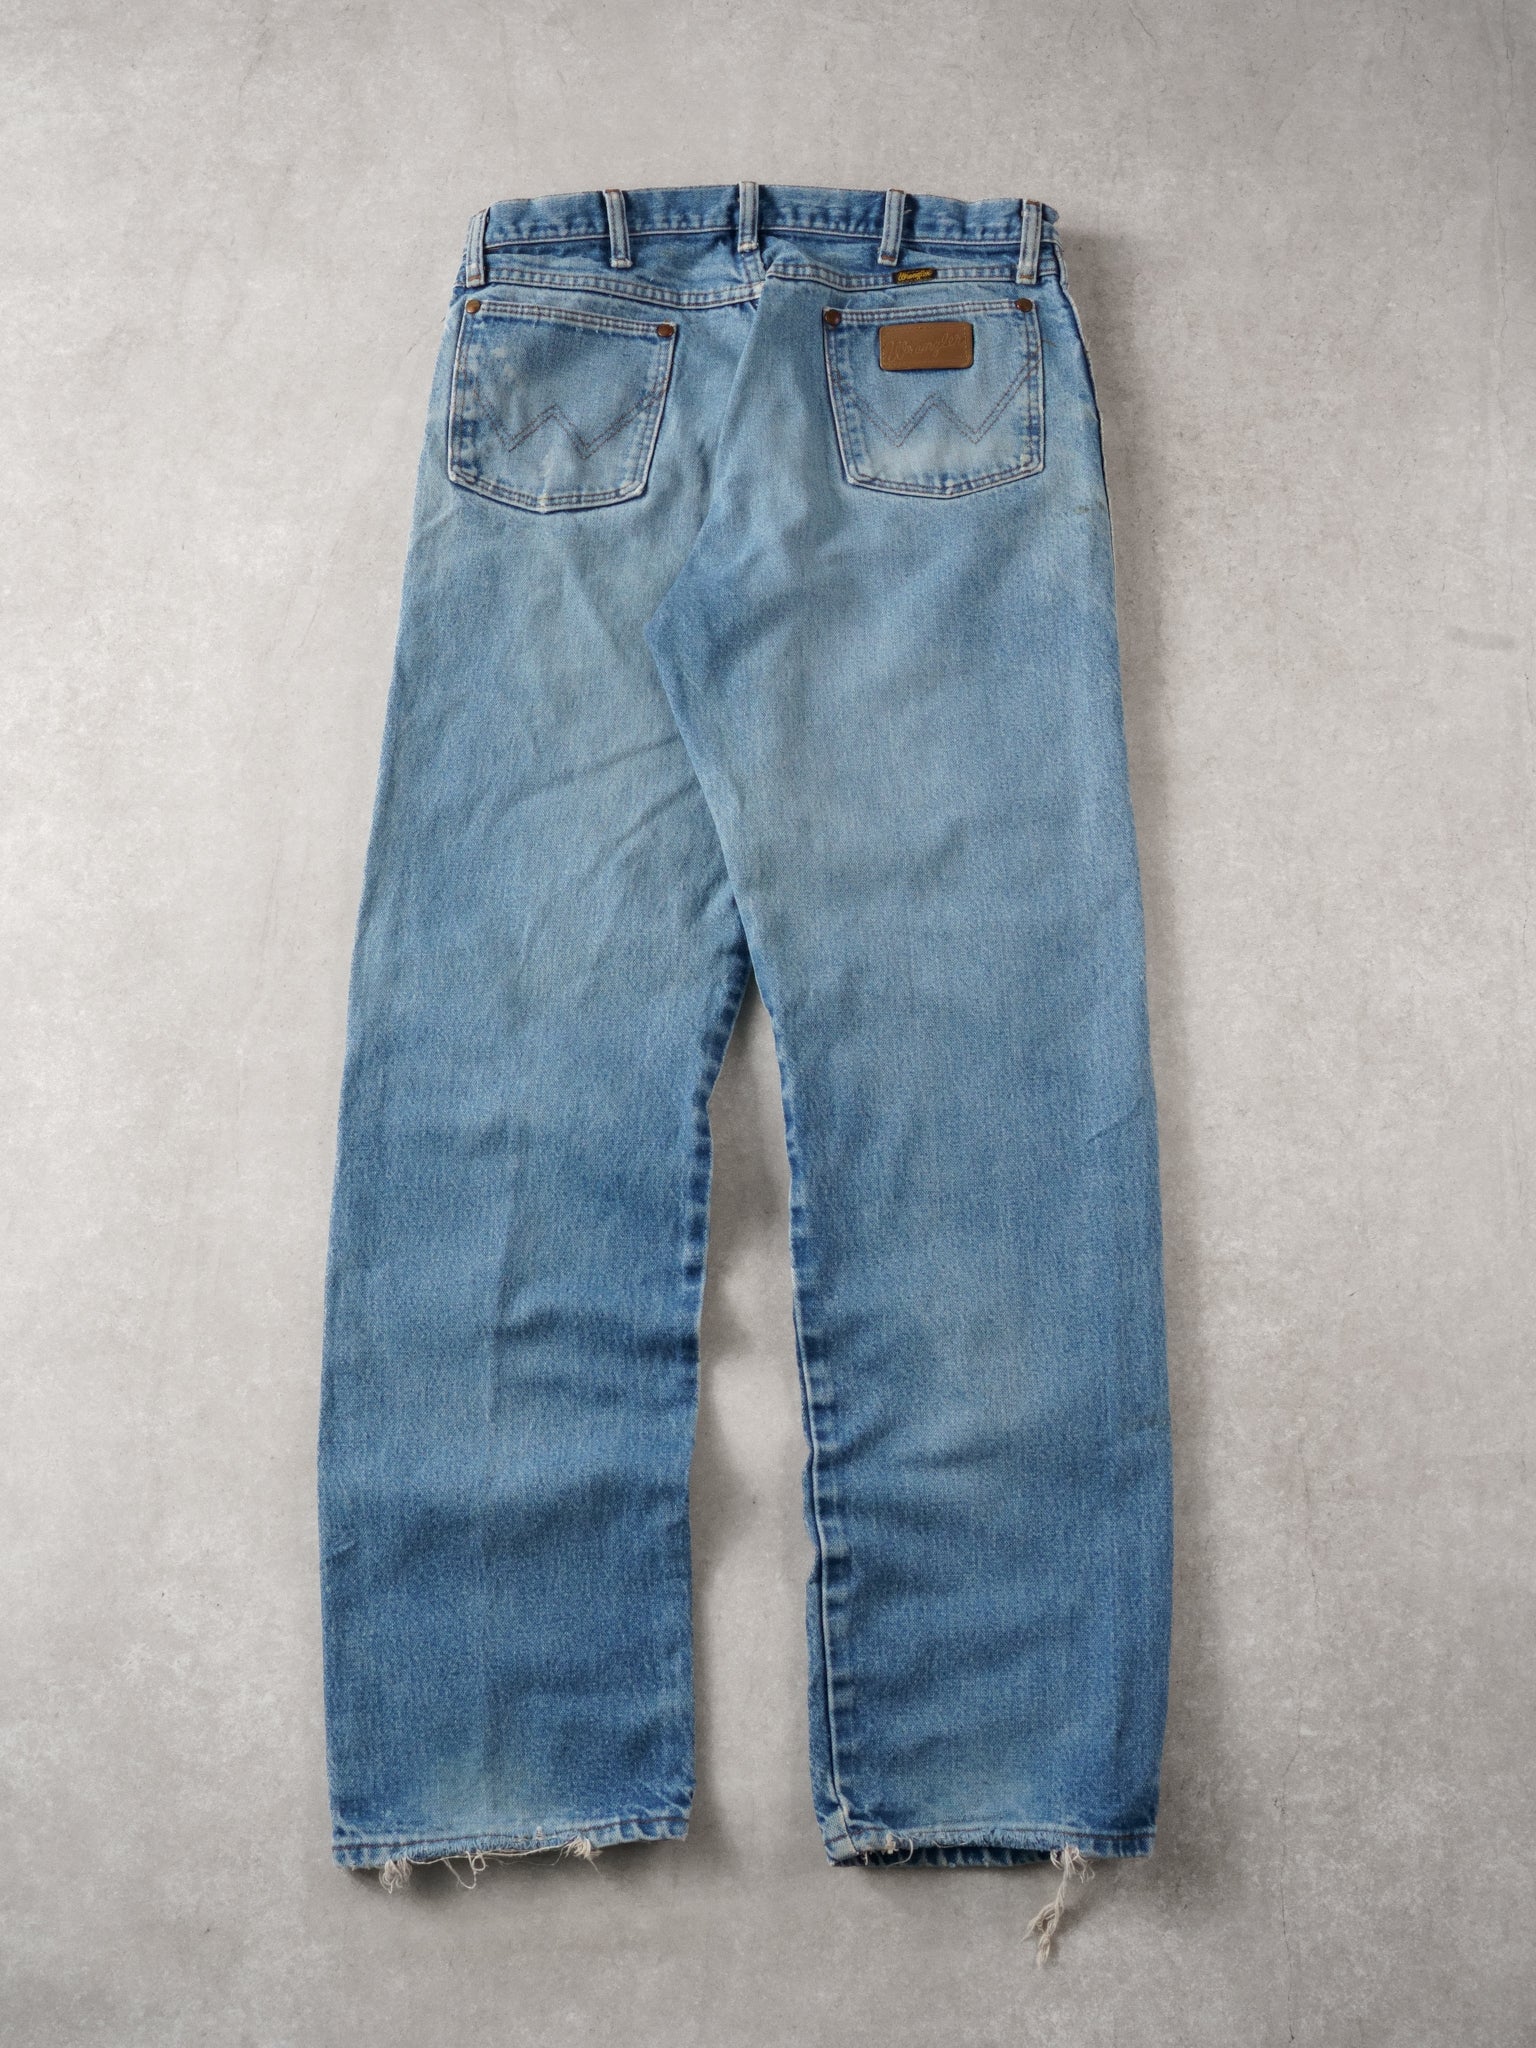 Vintage 90s Light Blue Wrangler Denim Pants (34x33)